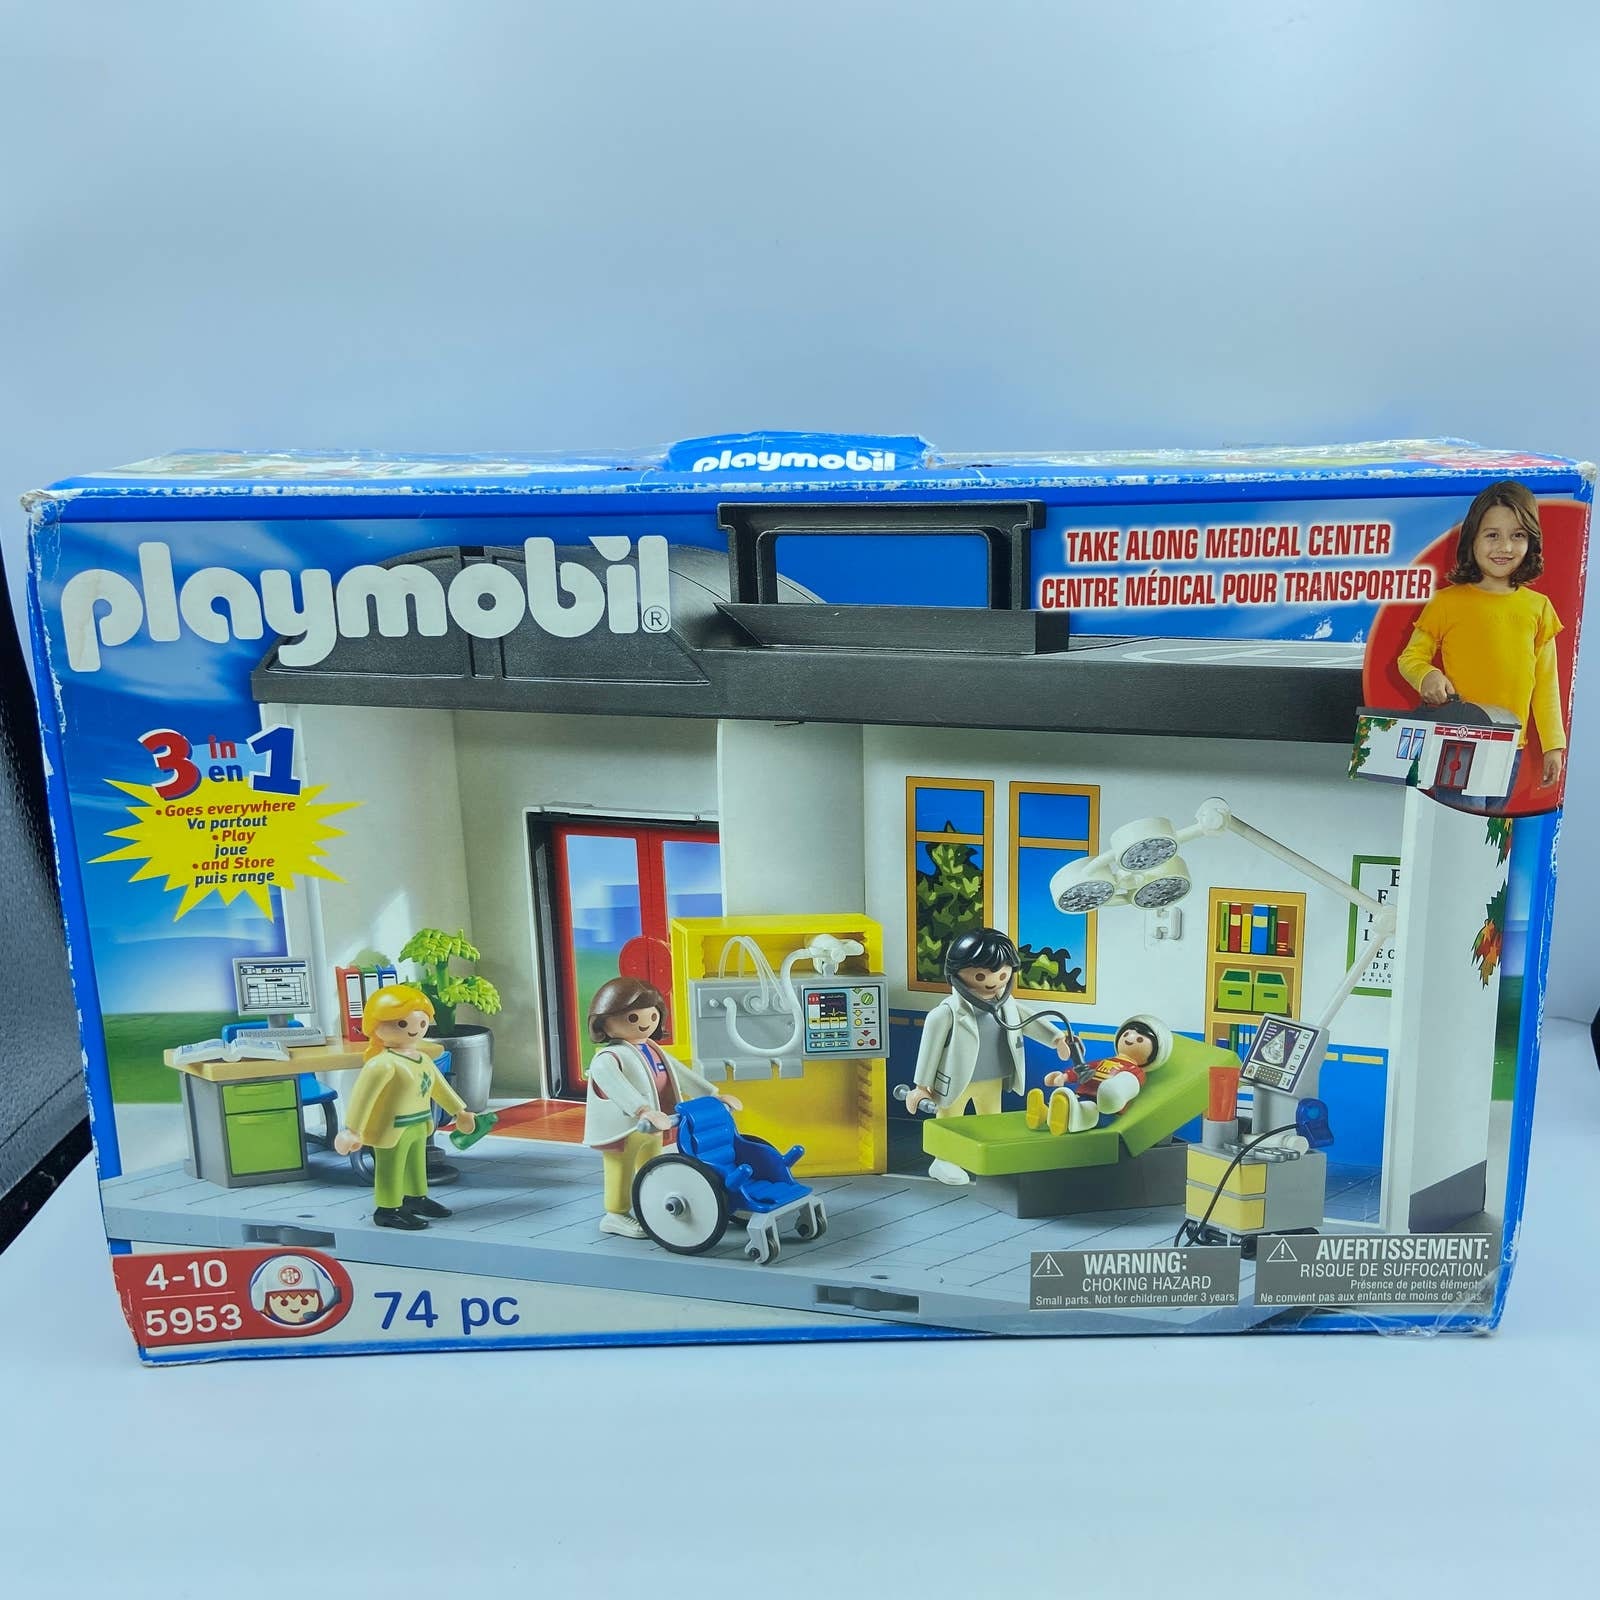 Playmobil Take Along Hospital Medical Center Playset - Etsy